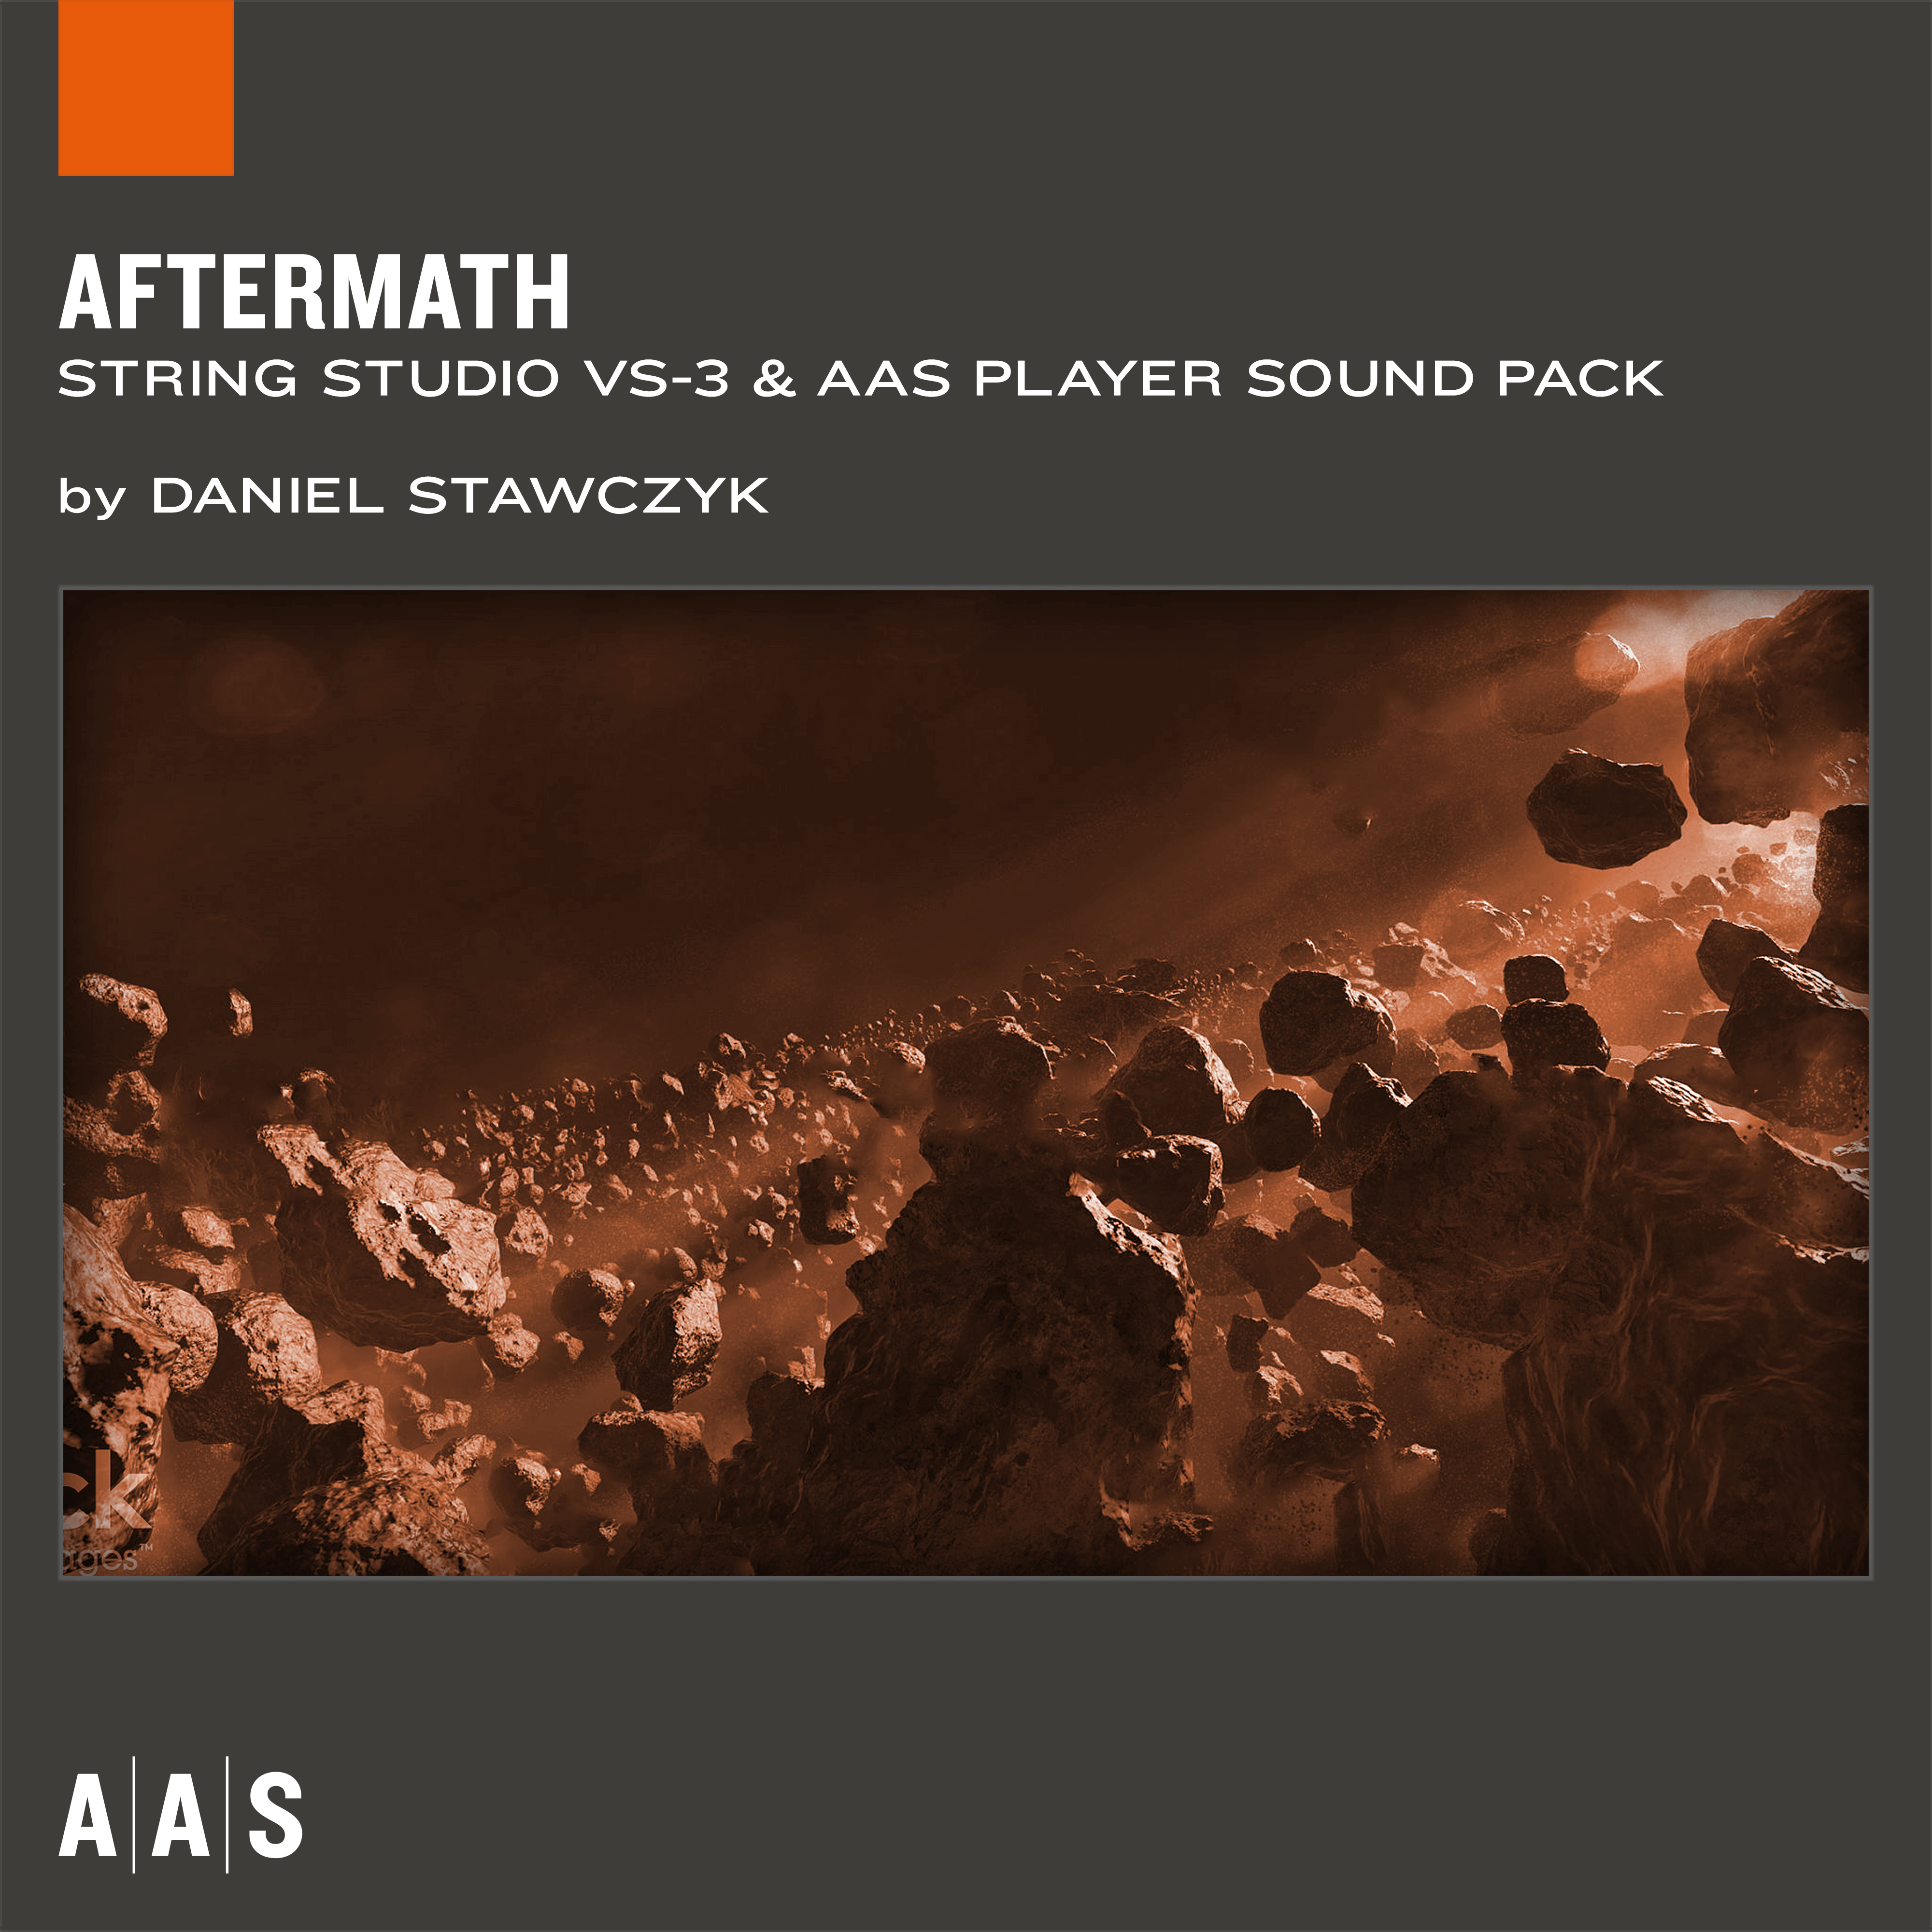 AAS Sound Packs: Aftermath AAS Sound Packs PluginFox